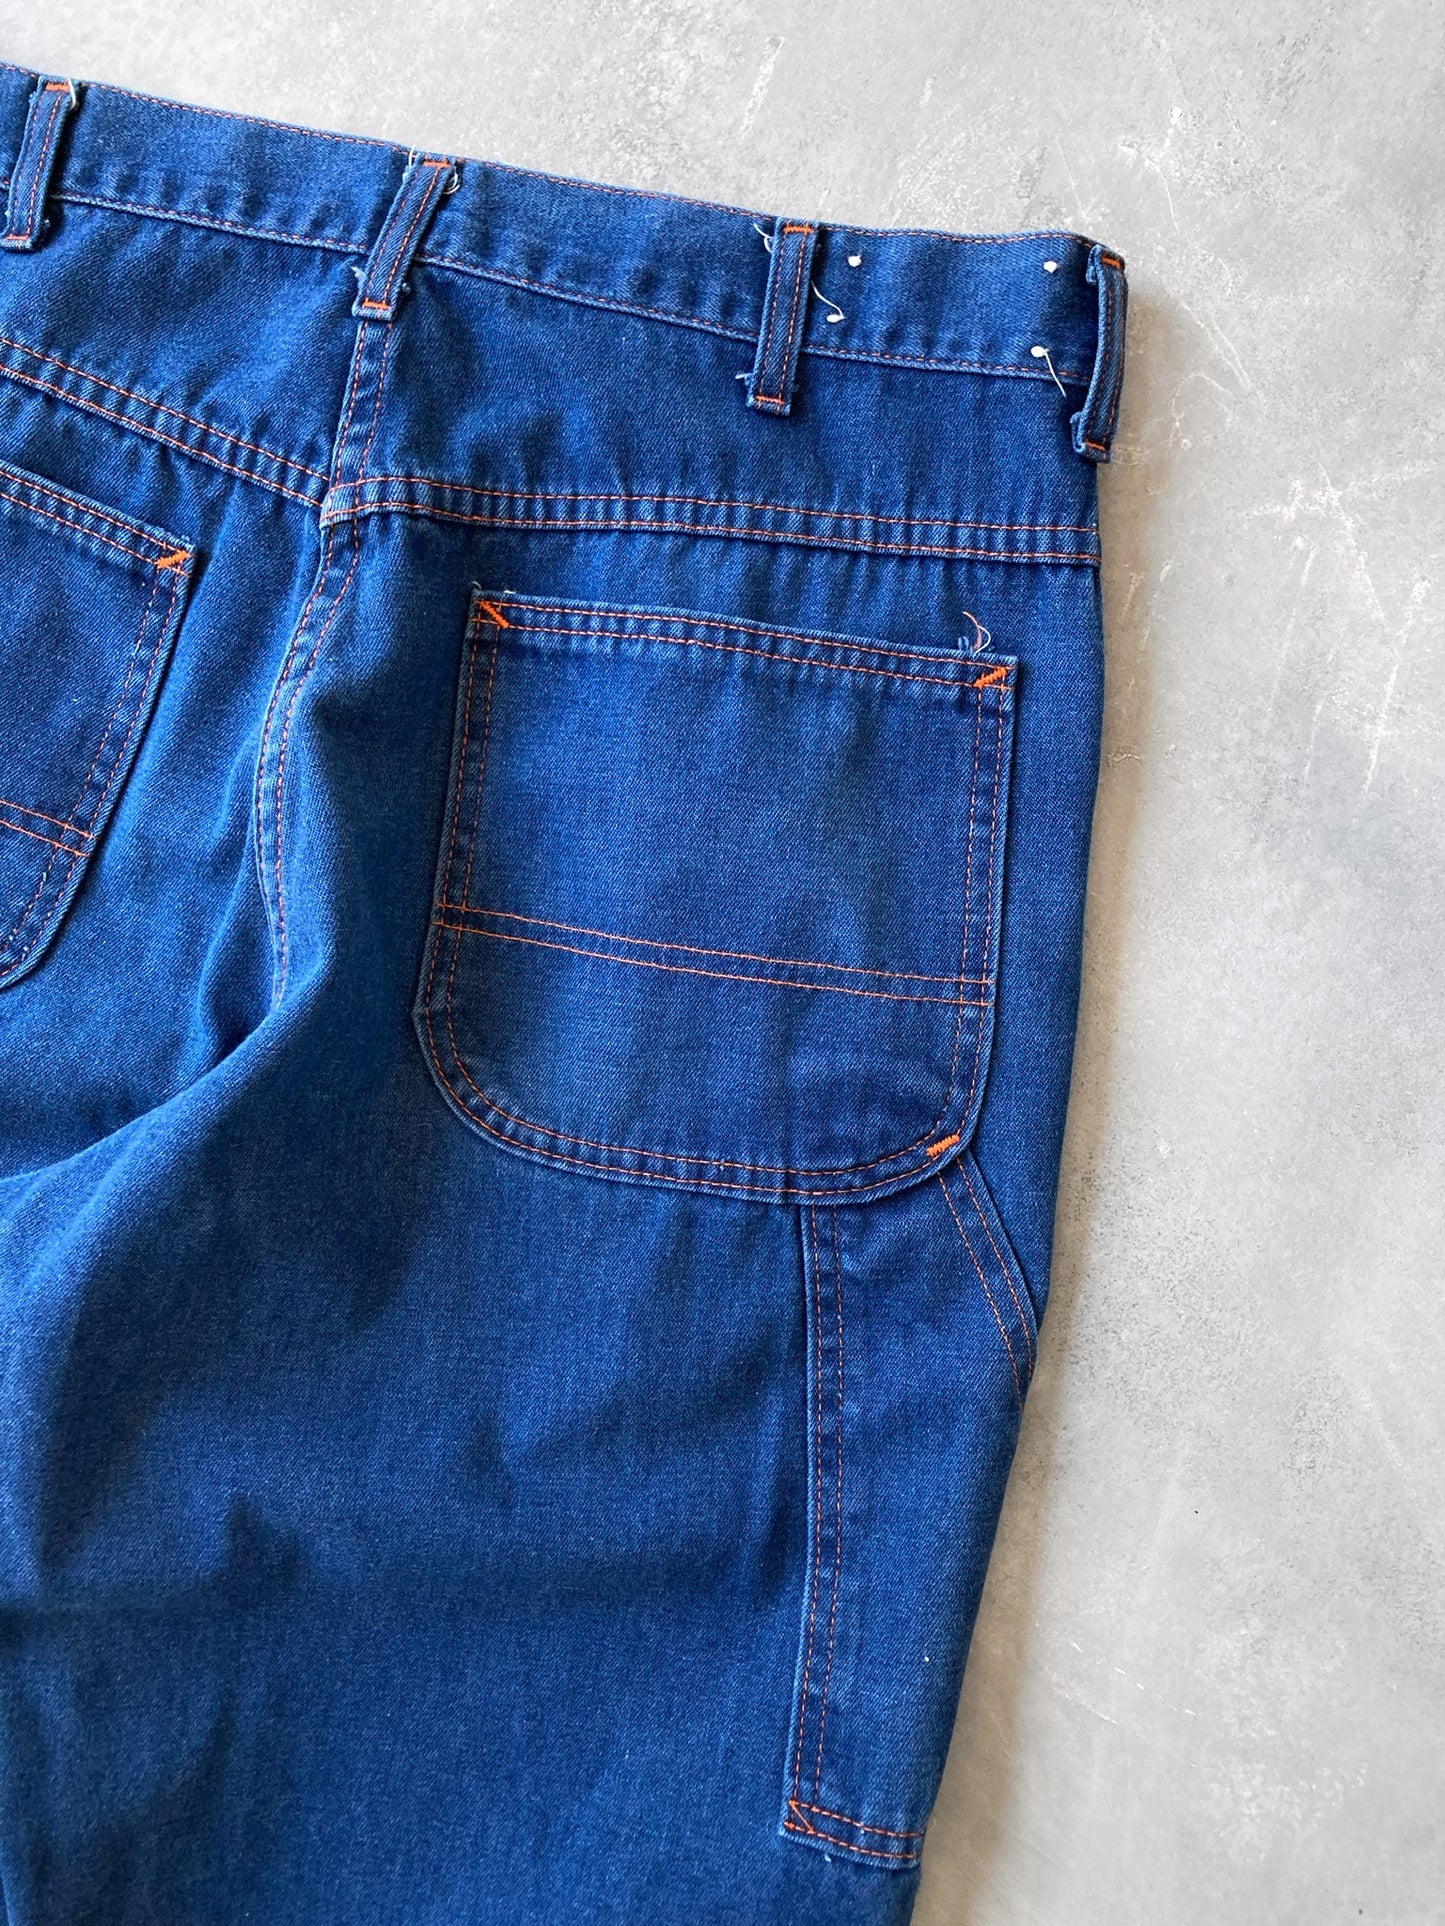 Contrast Stitched Carpenter Jeans 80's - 34x29 / 12